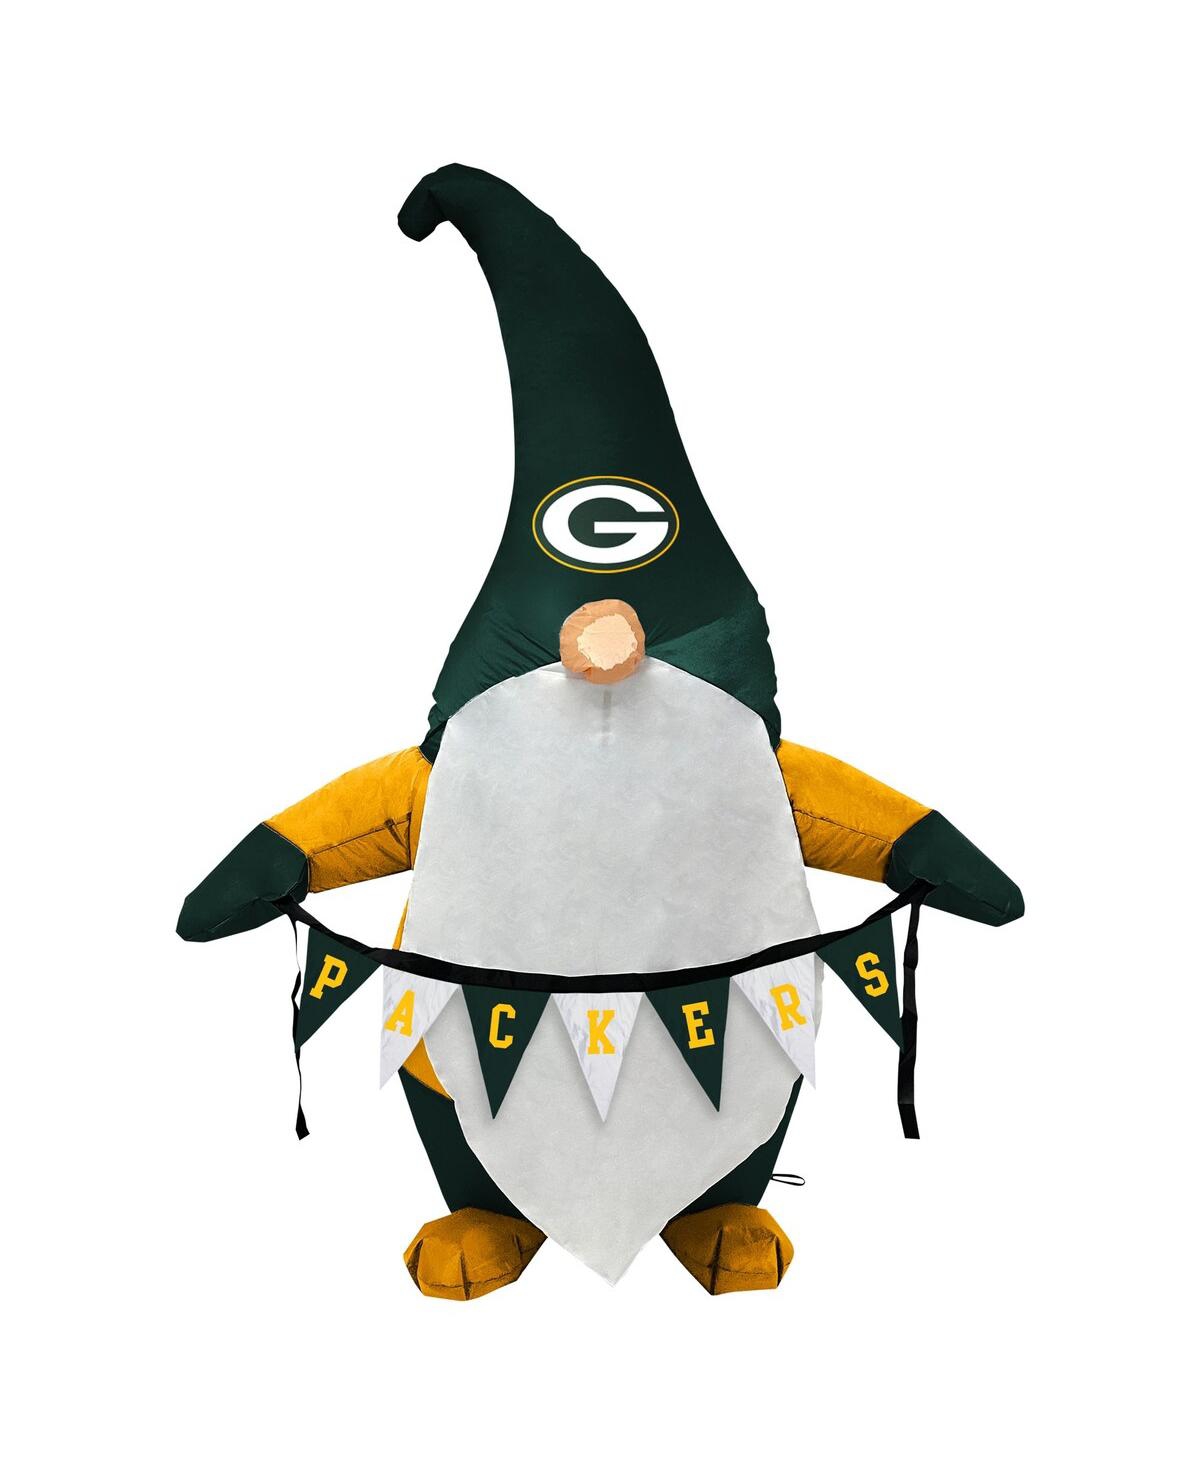 Pegasus Green Bay Packers Inflatable Gnome - Multi